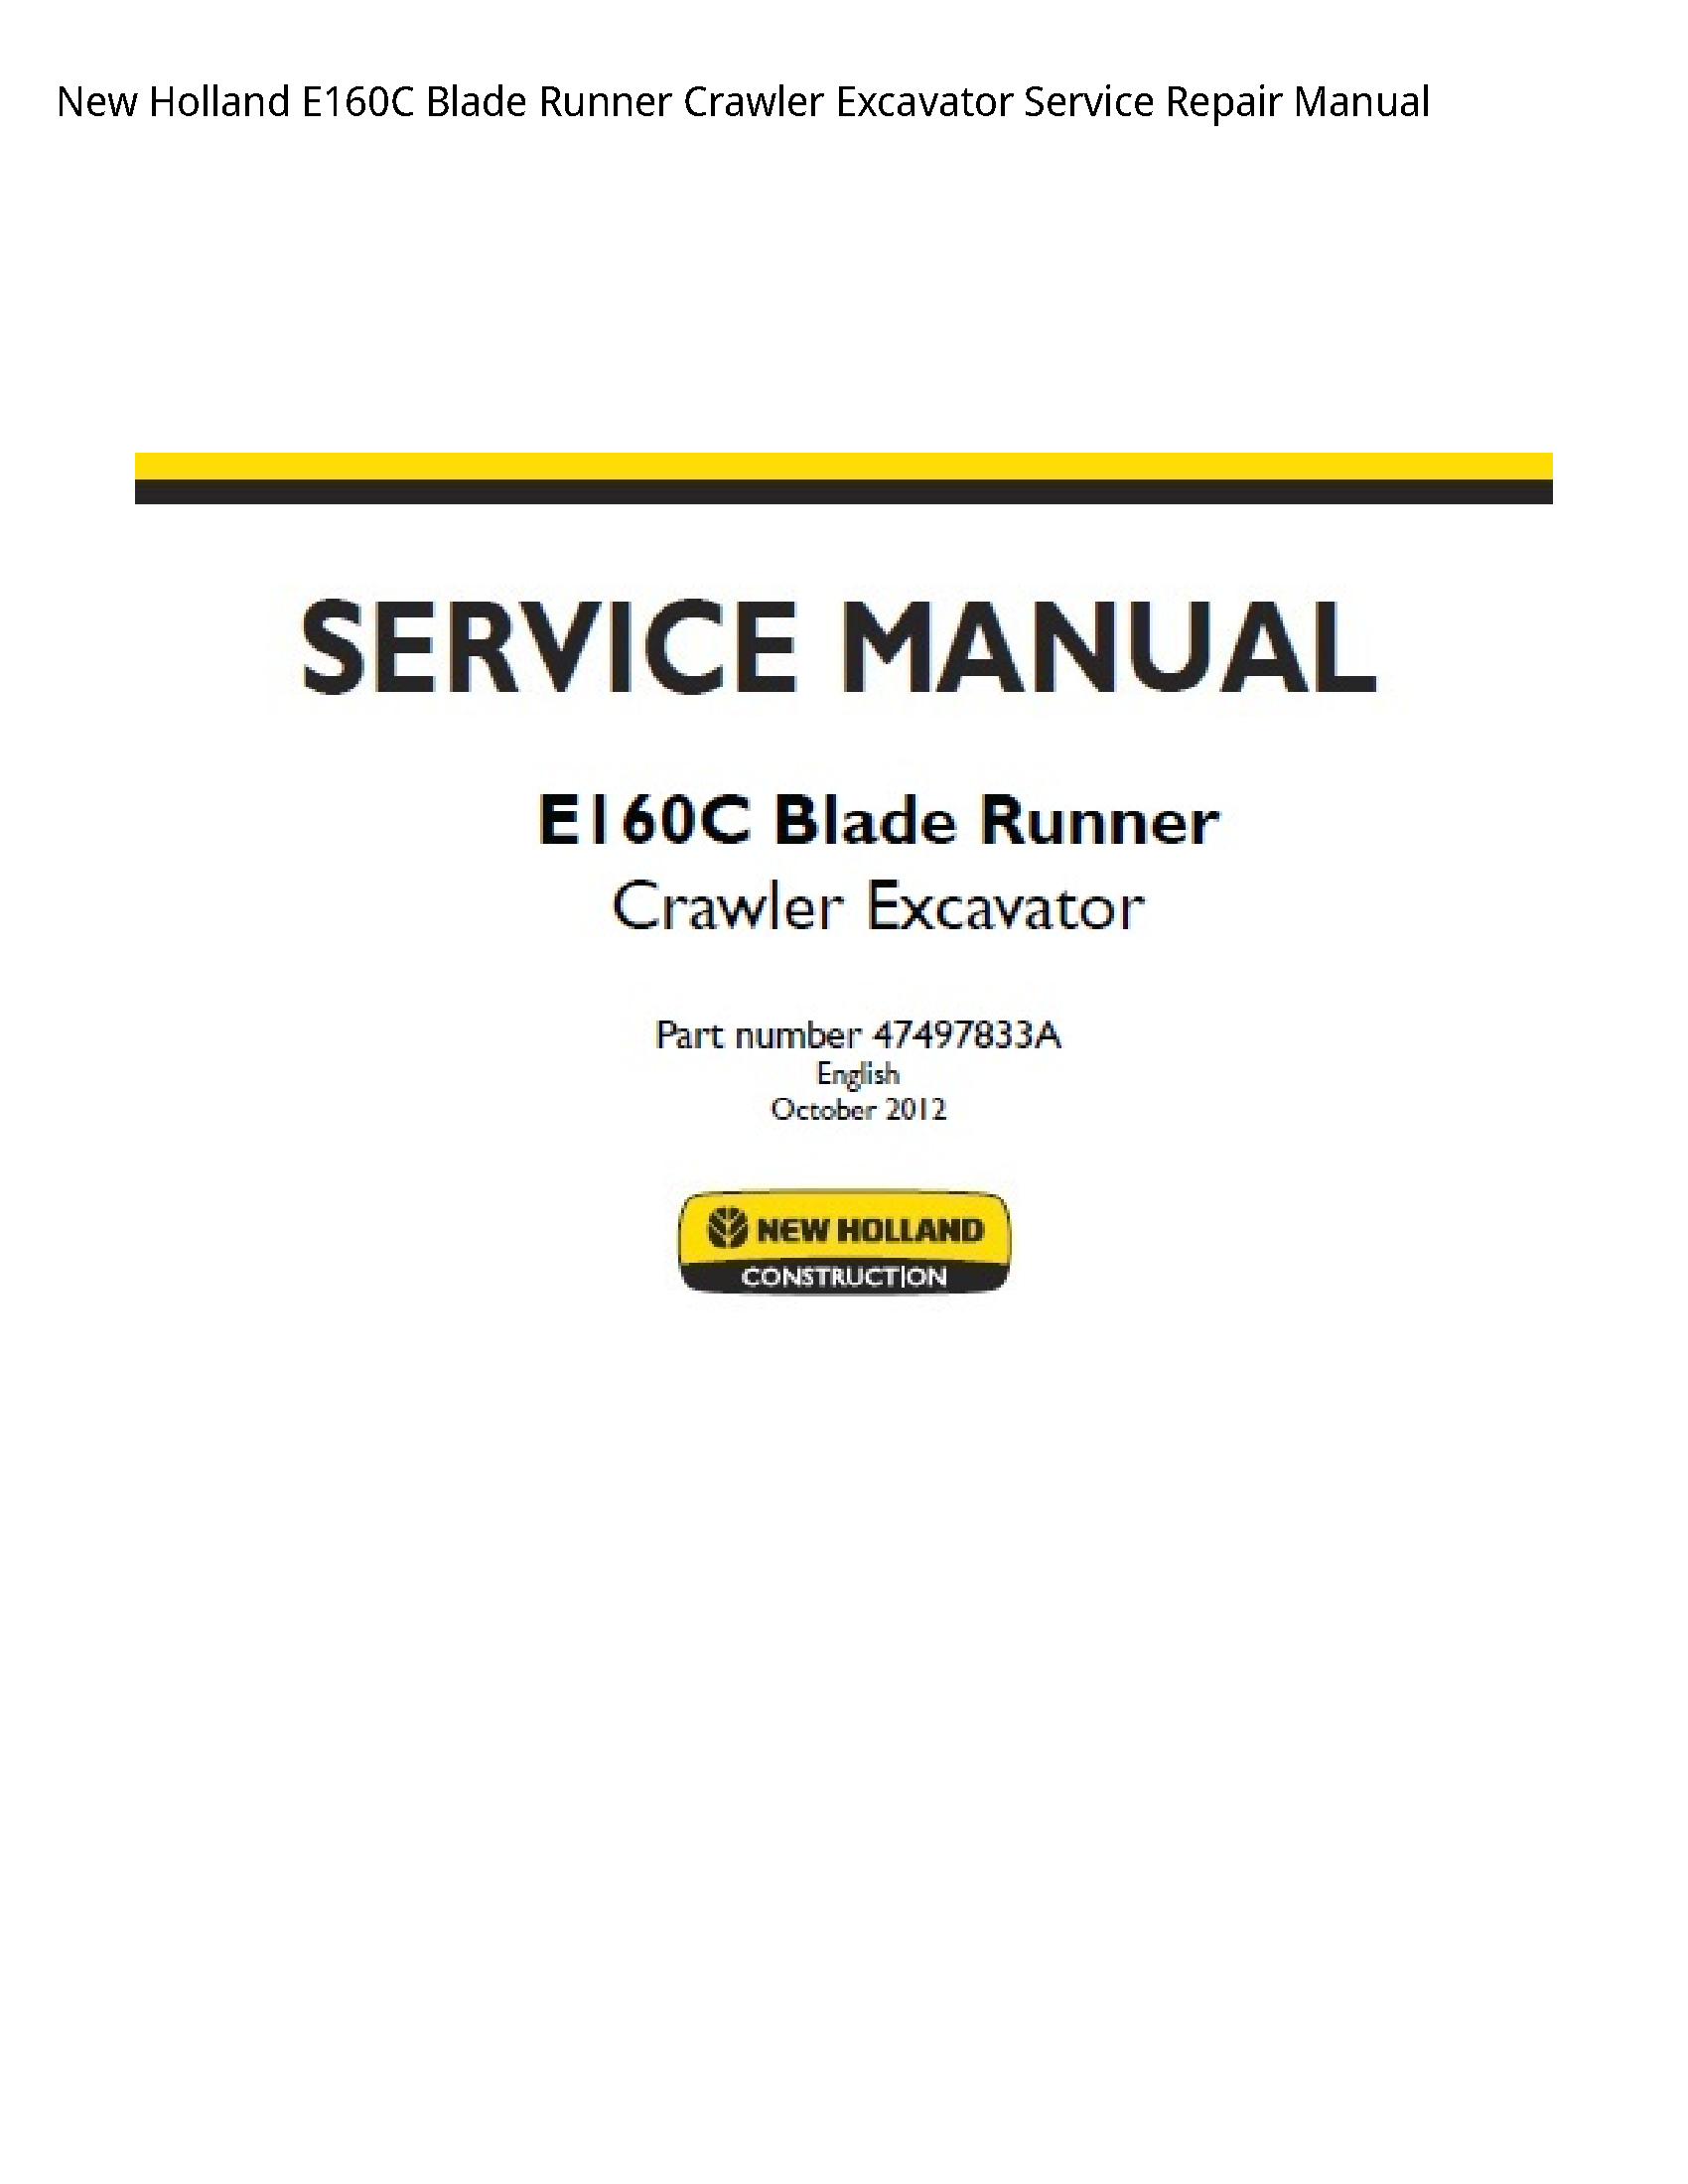 New Holland E160C Blade Runner Crawler Excavator manual